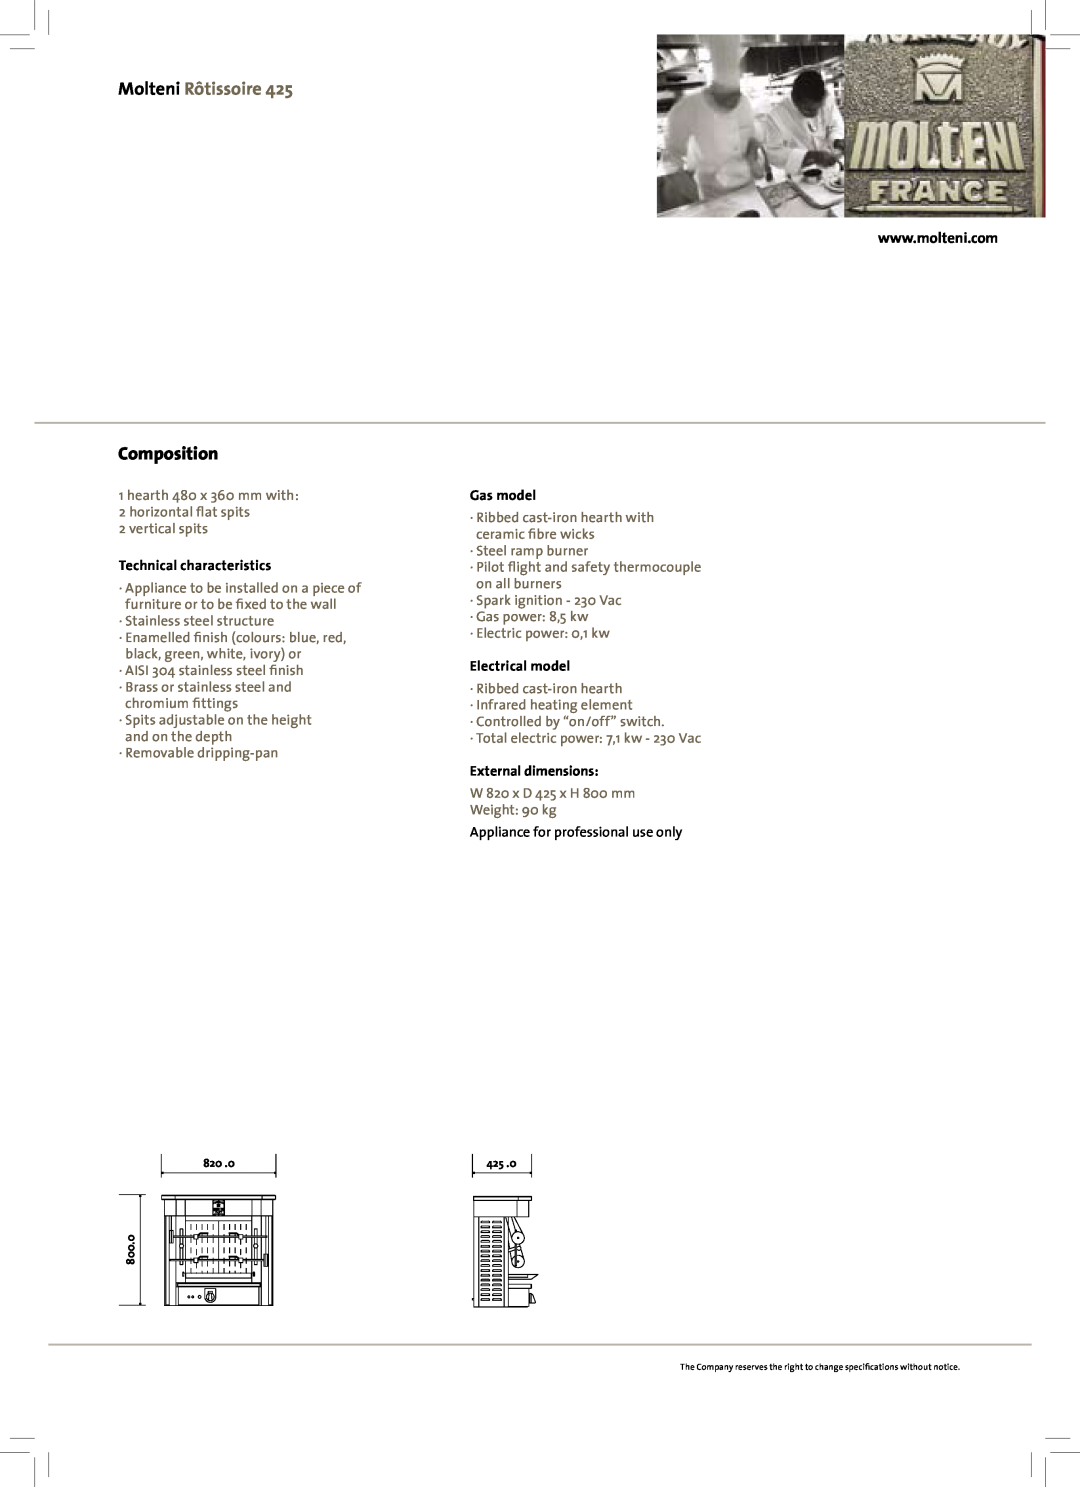 Molteni 425 manual 800.0, Molteni Rôtissoire, Composition, Technical characteristics, Gas model, Electrical model 